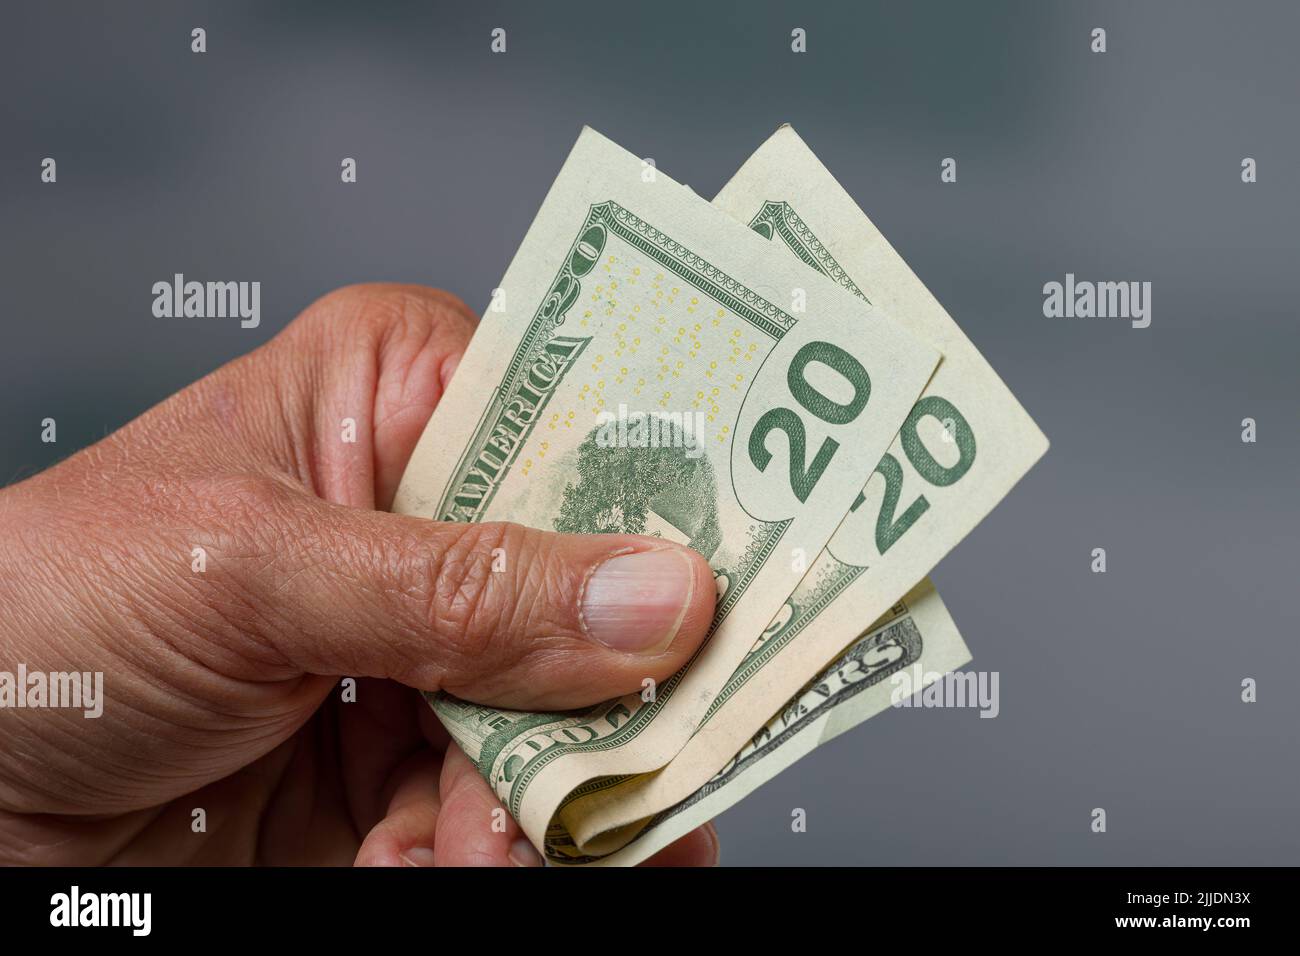 close-up of a man's hand holding a bunch of twenty dollar bills / greenbacks Stock Photo